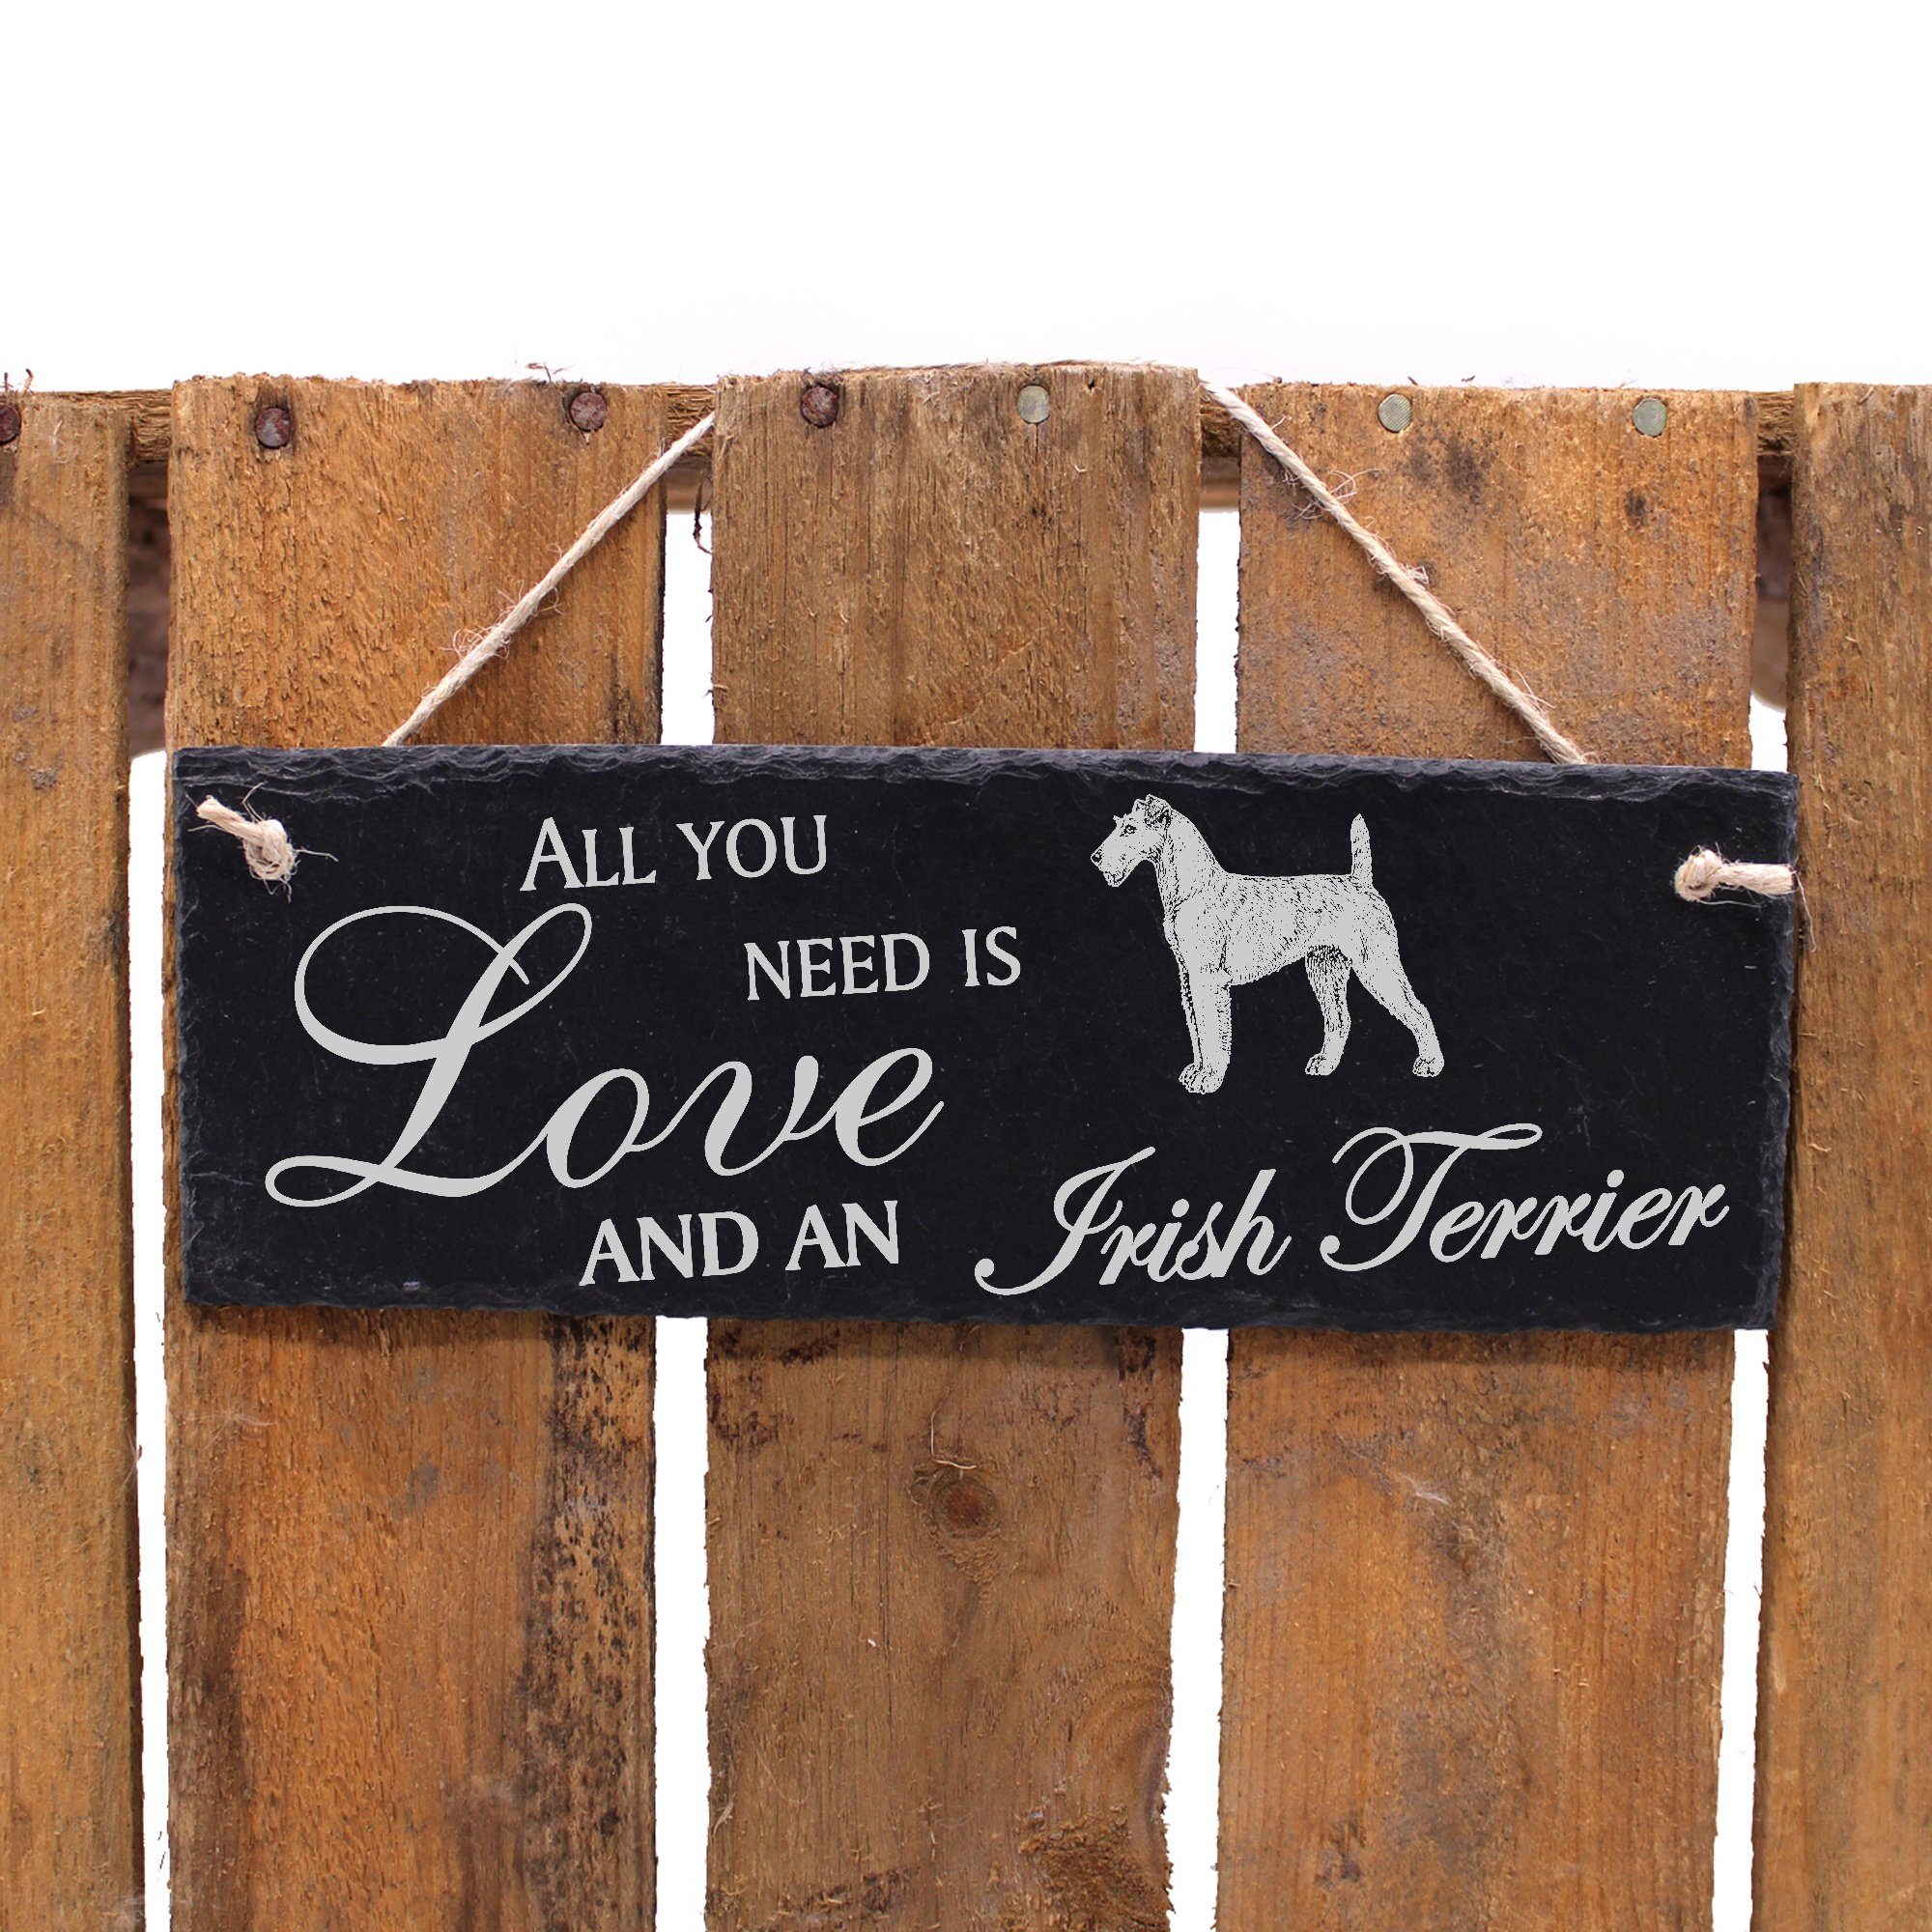 Dekolando Hängedekoration Irish Terrier Love need you Irish an and Terrier is 22x8cm All